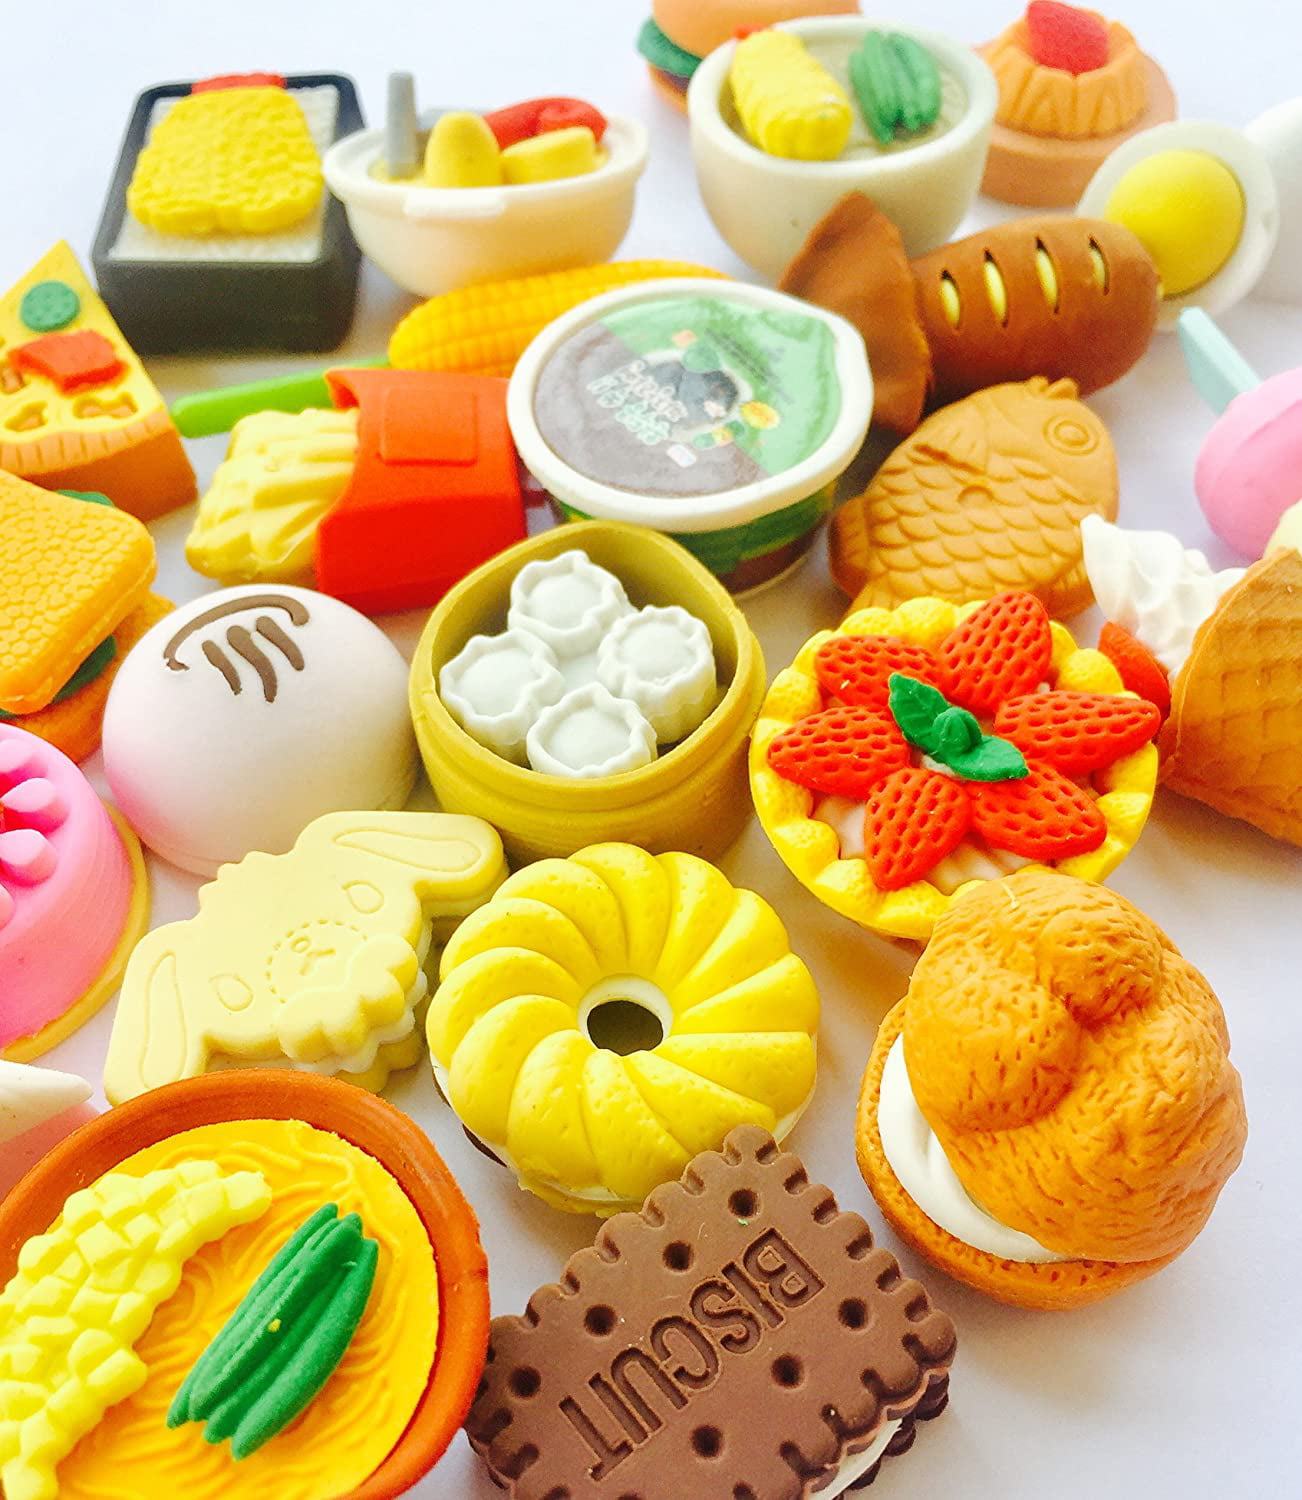 Dollhouse Food Accessories 100 Slice Cake Bakery Dollhouse Miniature Food 14970 